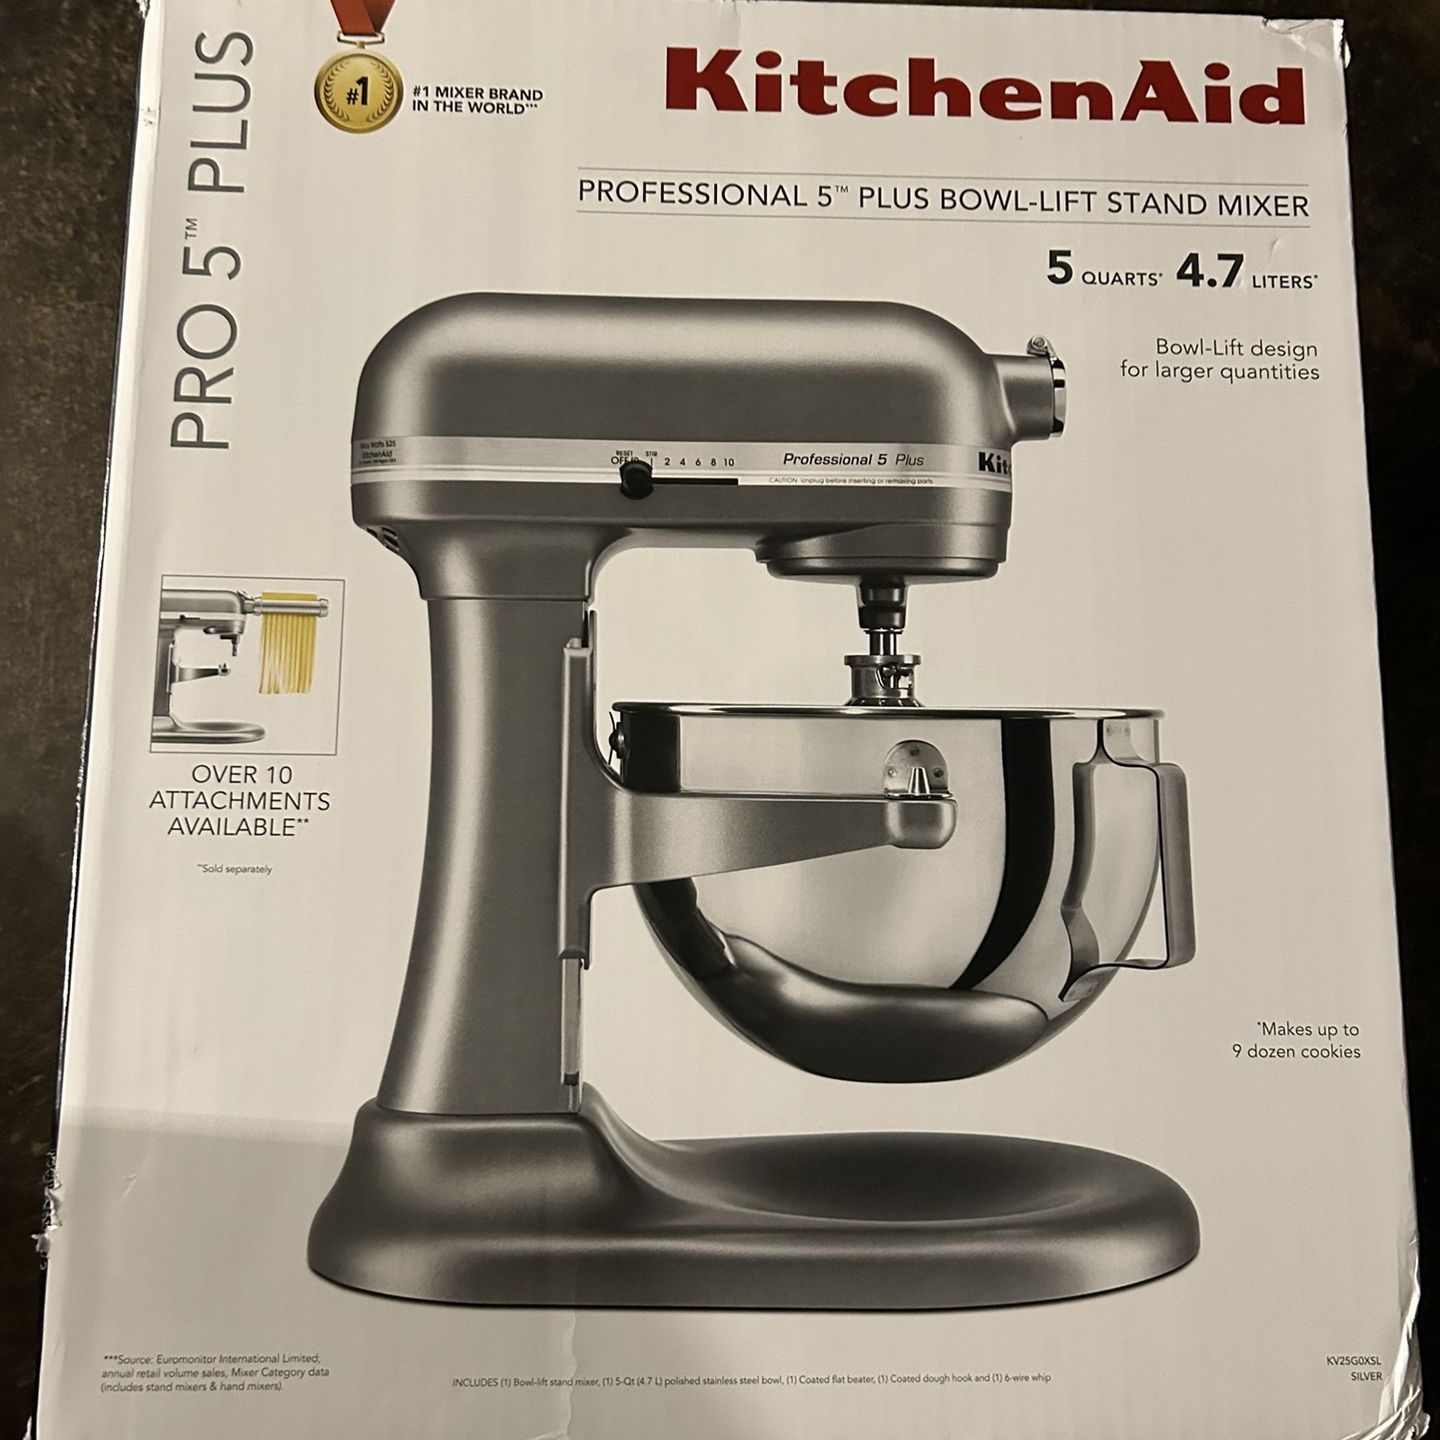 KitchenAid Professional 5 Plus Lift Stand Mixer - Silver, 5 qt